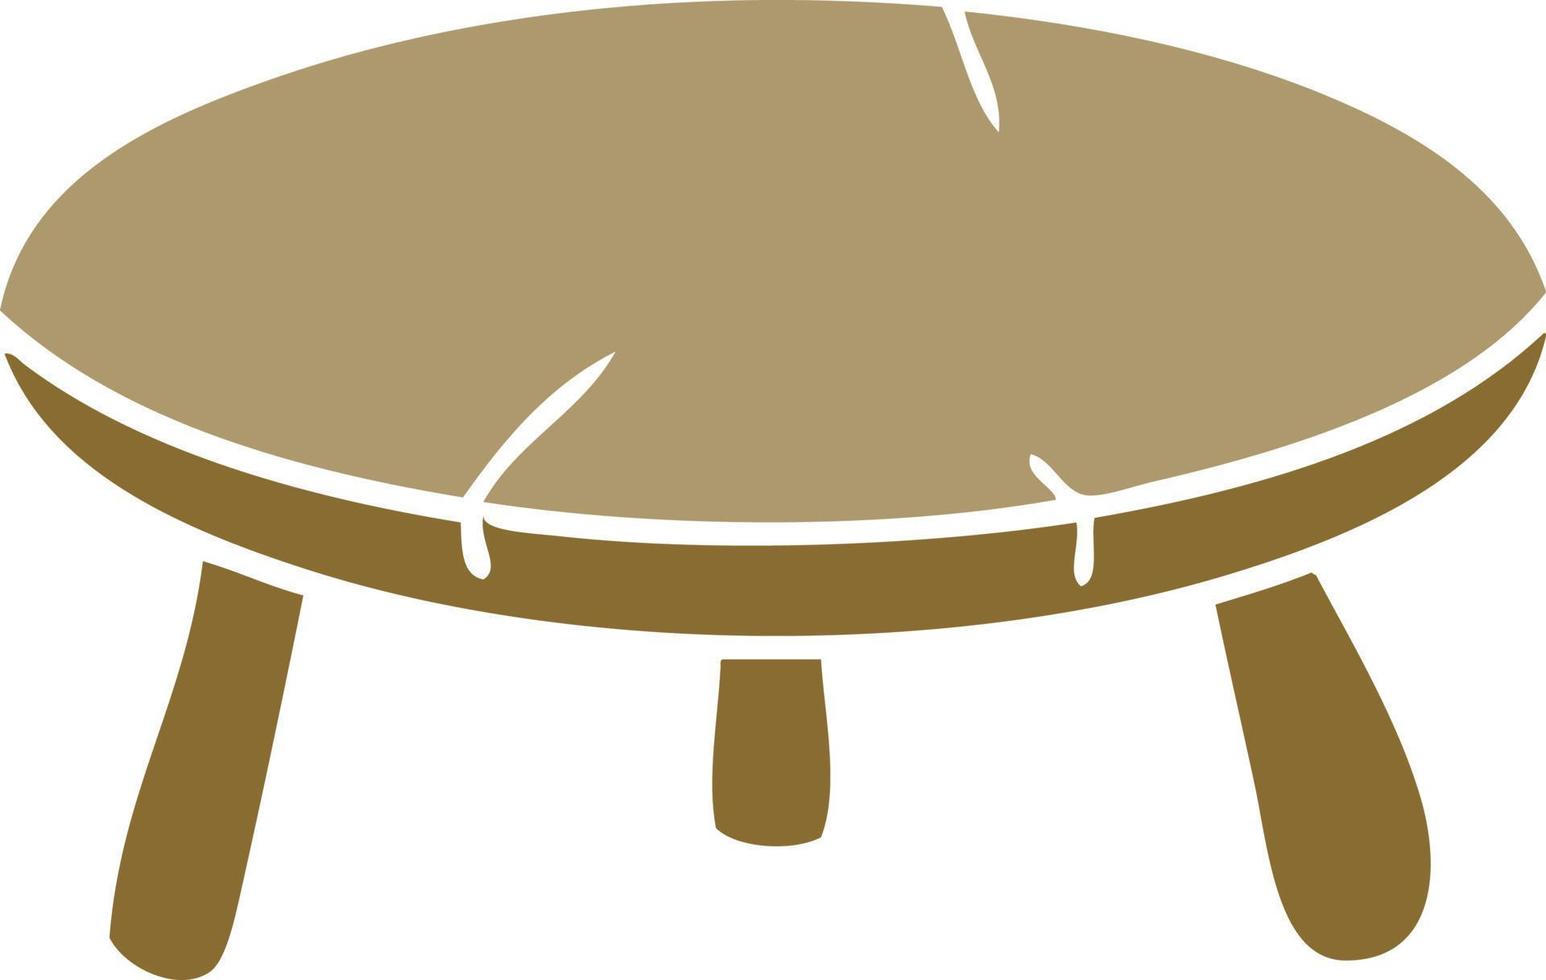 cartoon doodle of a wooden stool vector